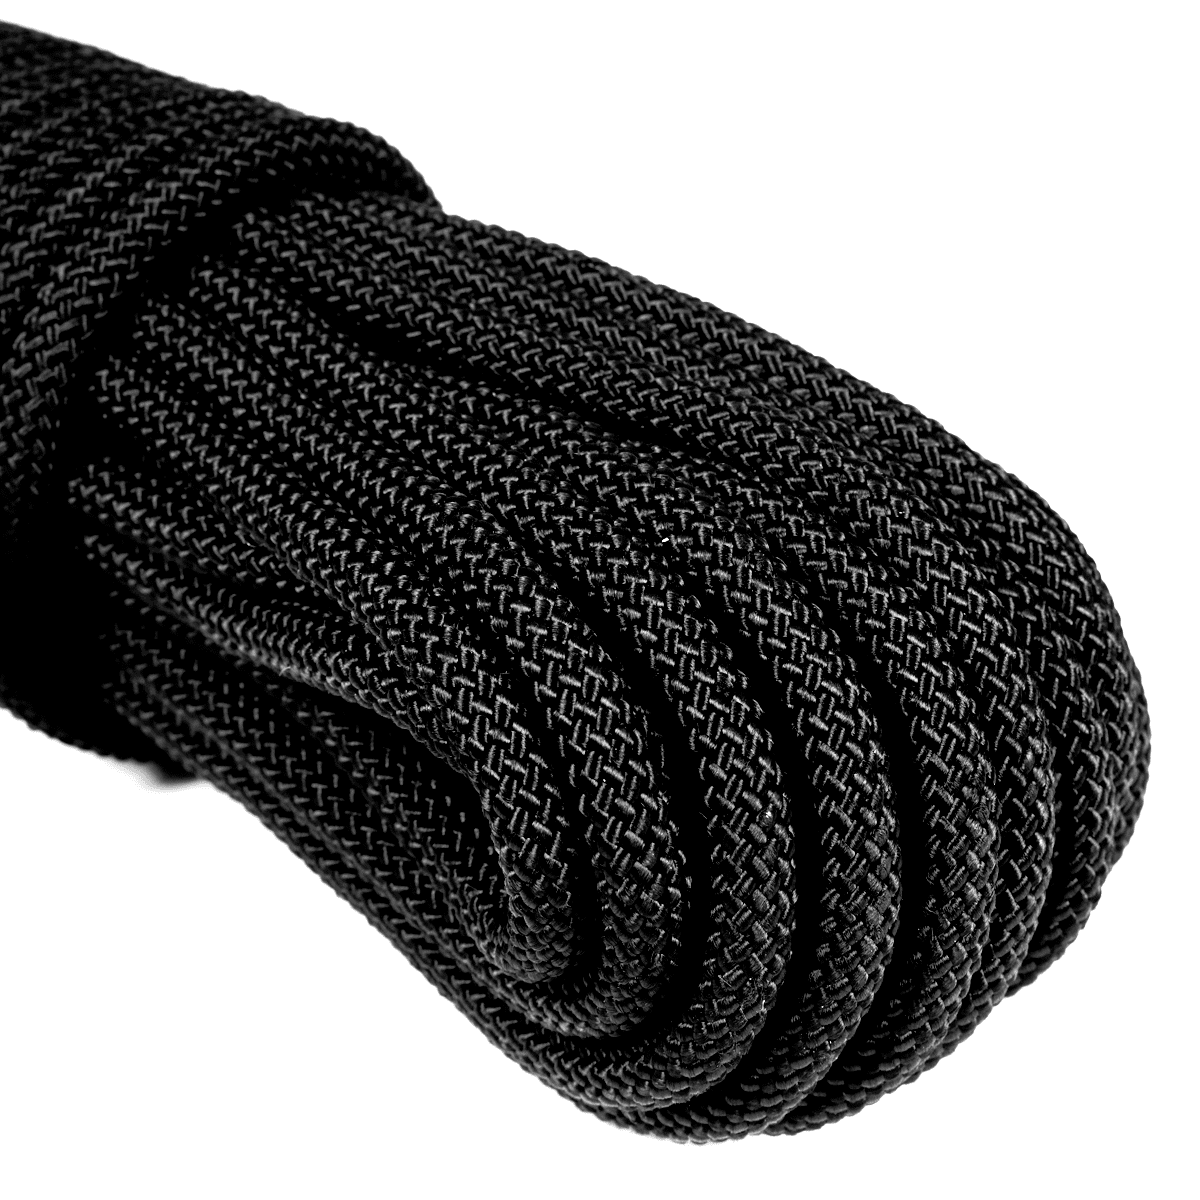 1/2" x 50' Black Nylon Rope